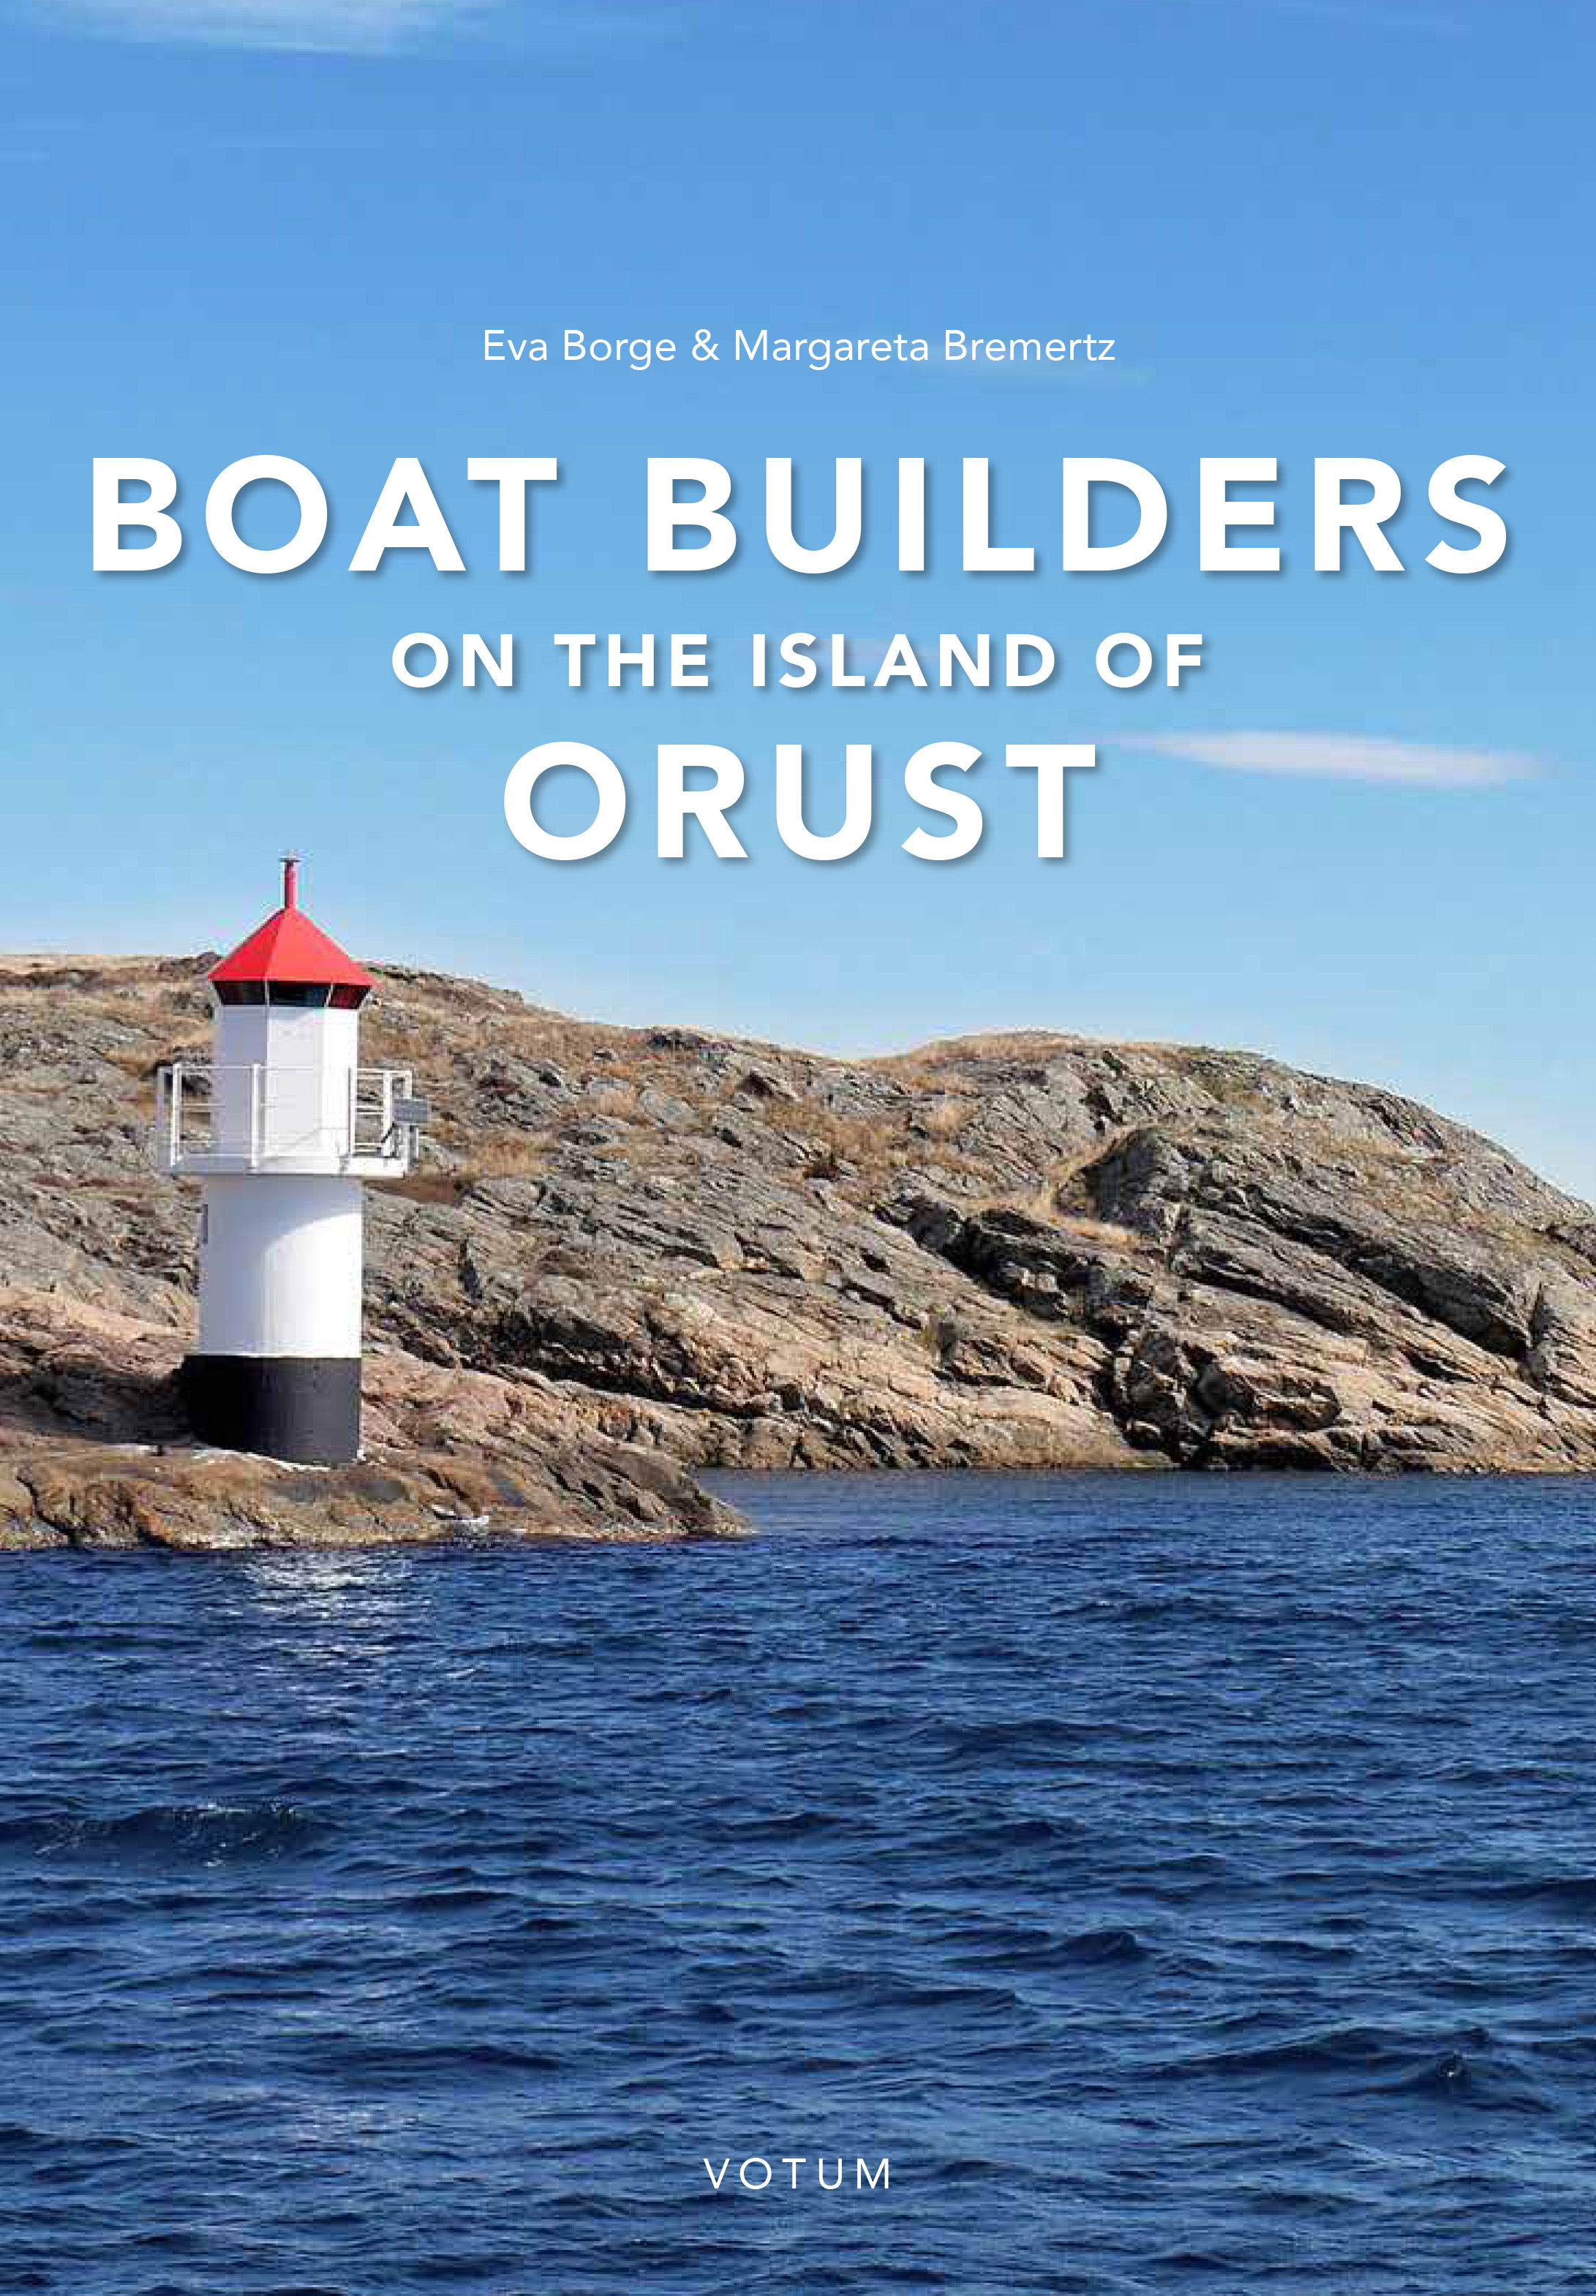 Boat Builders on the Island of Orust | Votum & Gullers Förlag